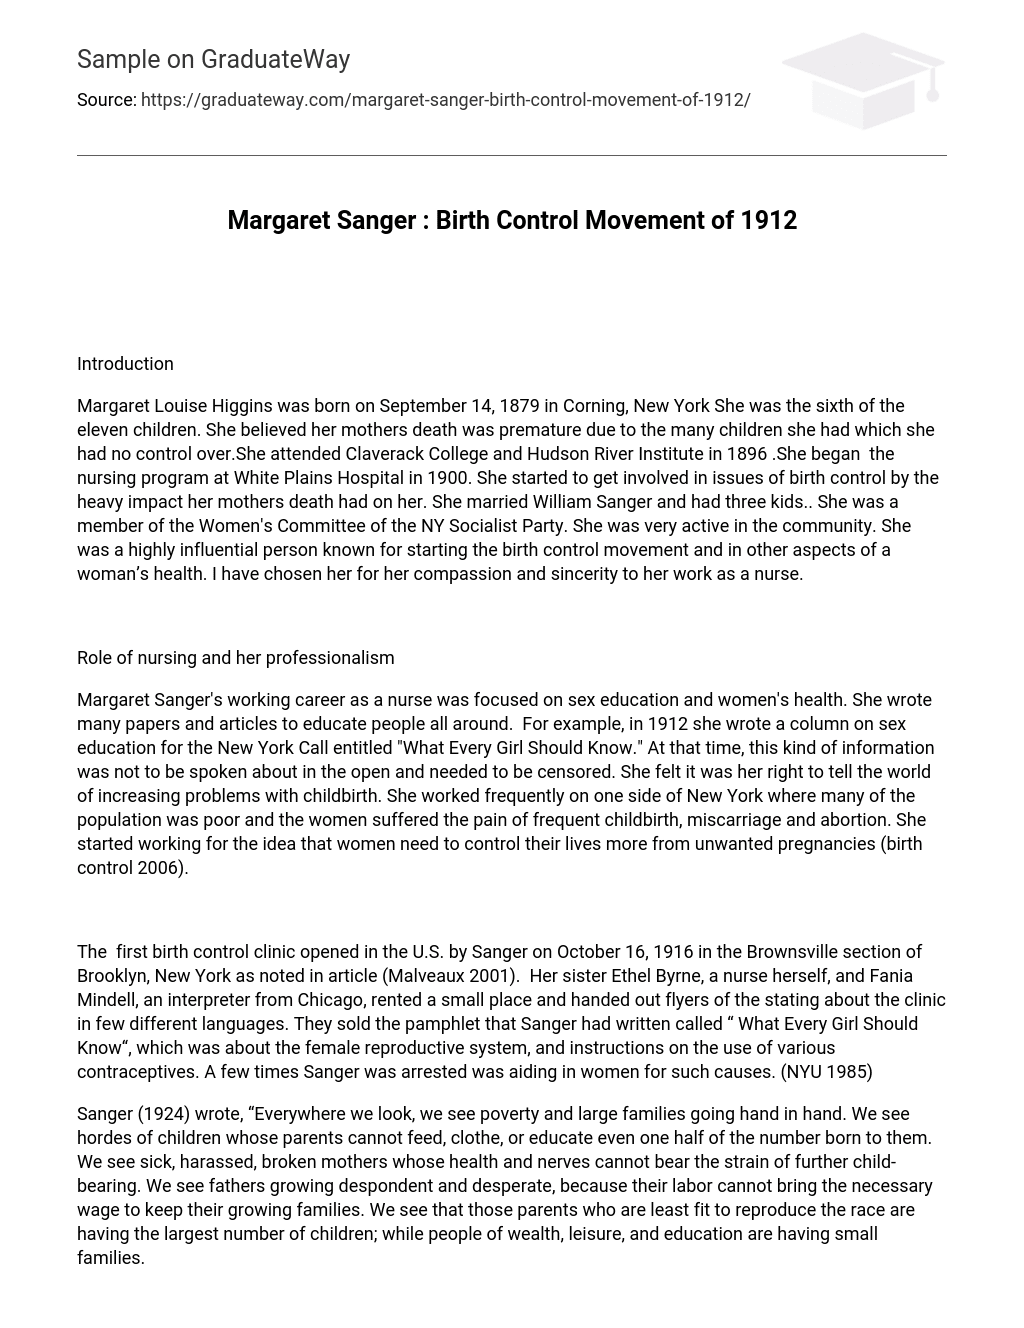 Margaret Sanger : Birth Control Movement of 1912